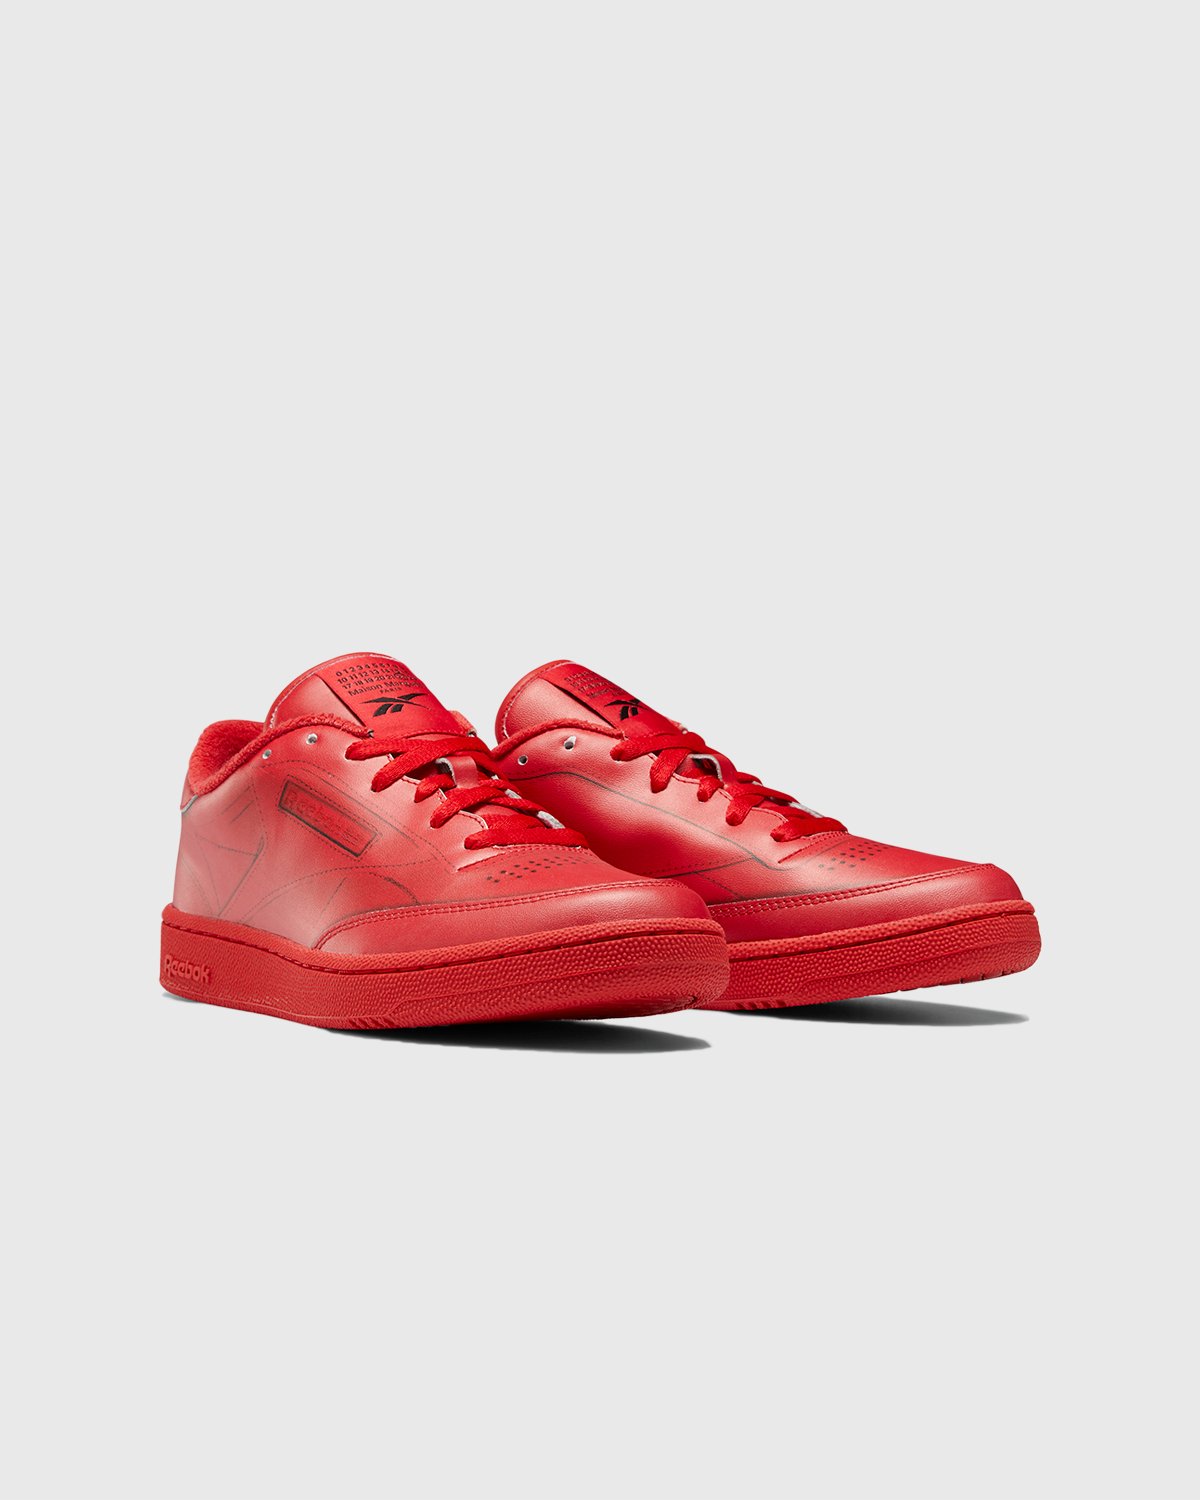 Maison Margiela x Reebok - Club C Trompe L’Oeil Red - Footwear - Red - Image 2